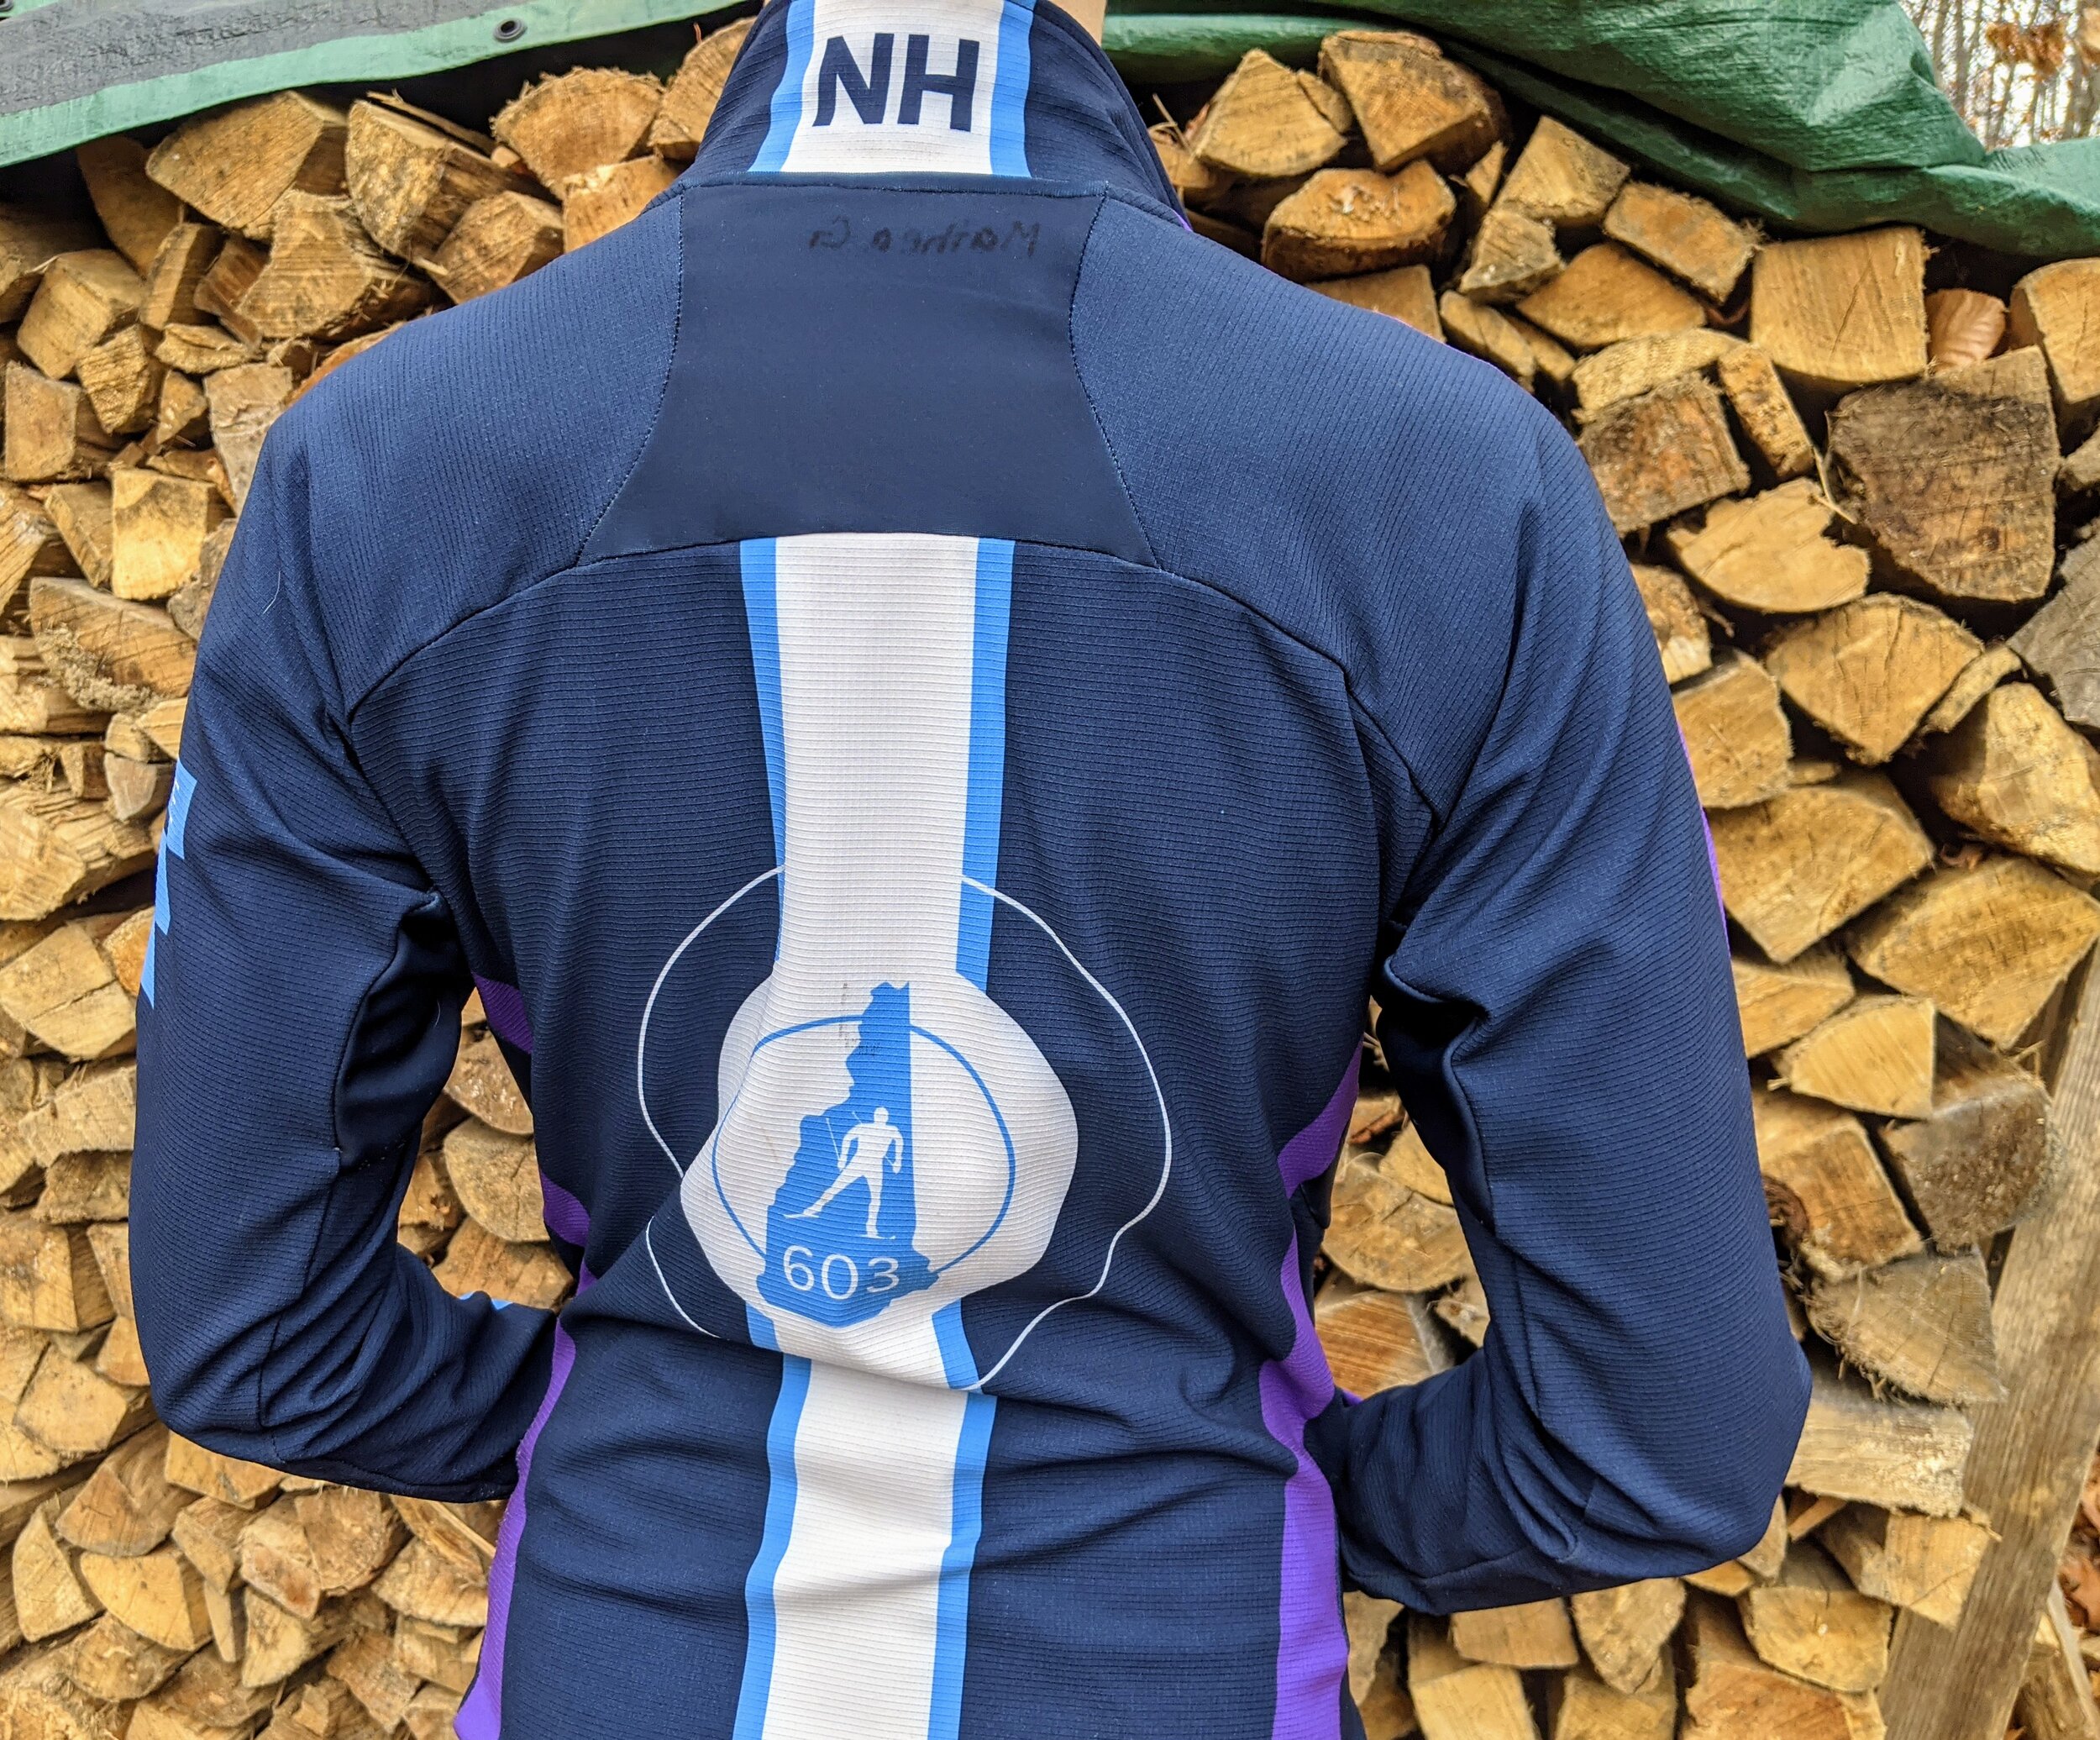 Team NH jacket.jpg